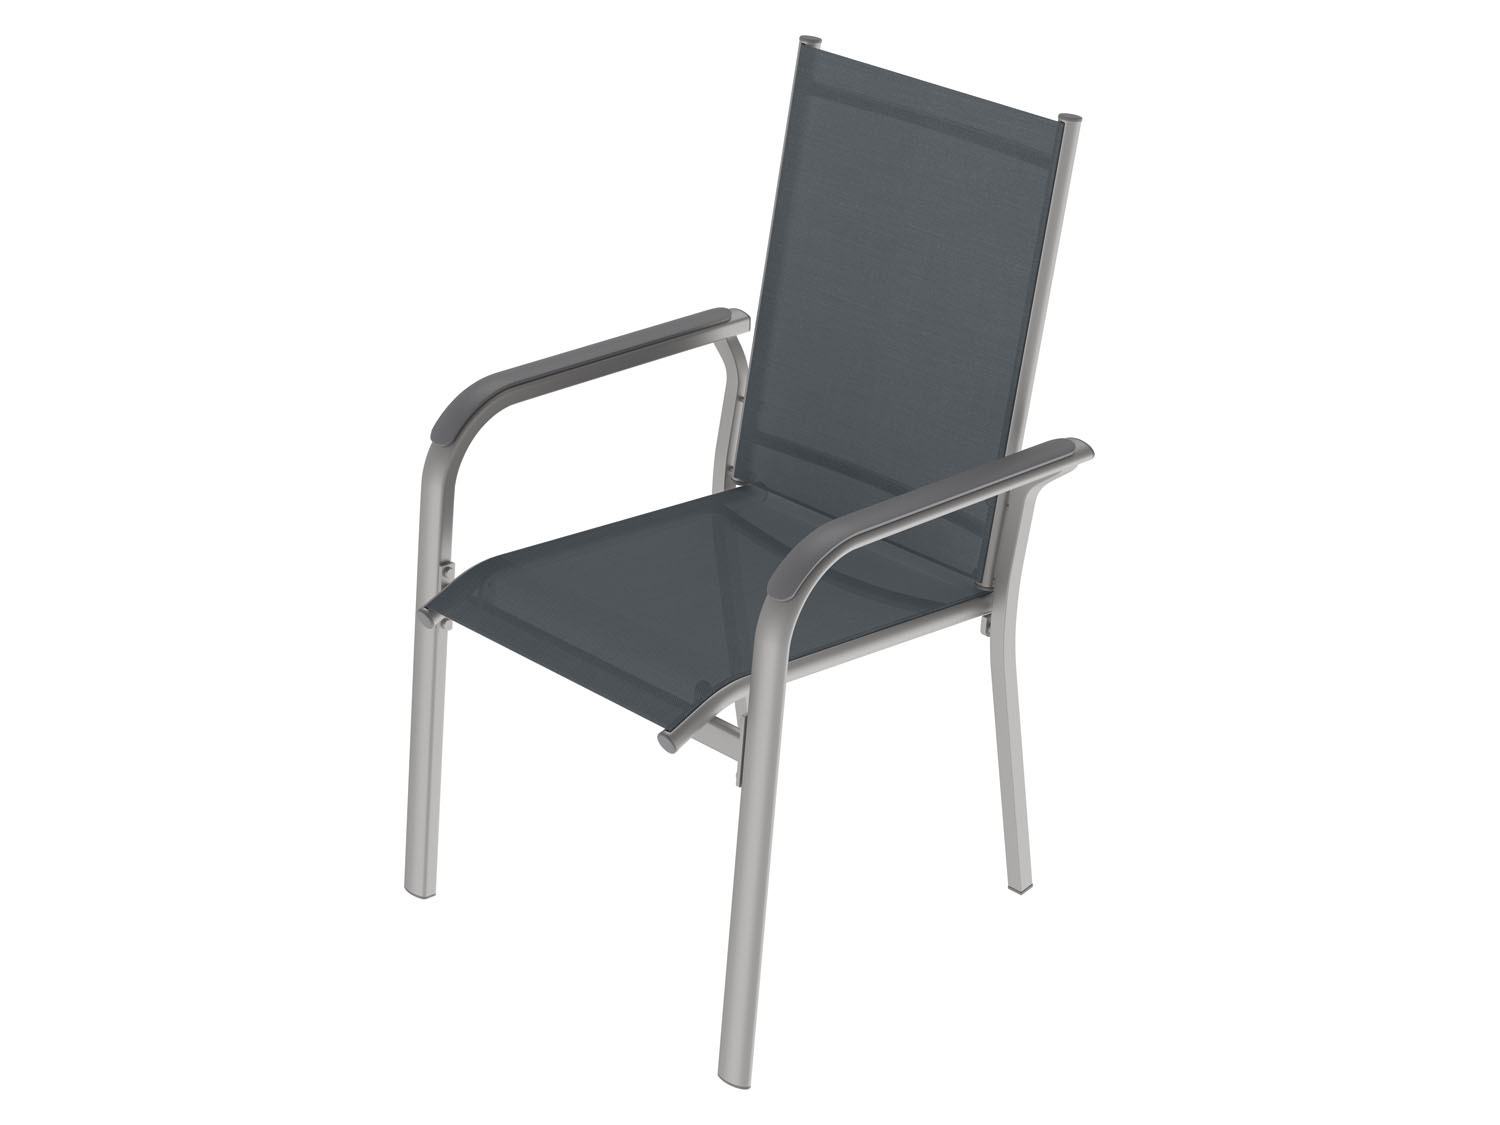 Vertrouwelijk mode Gevoel LIVARNO home Aluminium stapelstoel »Houston« | Lidl.be